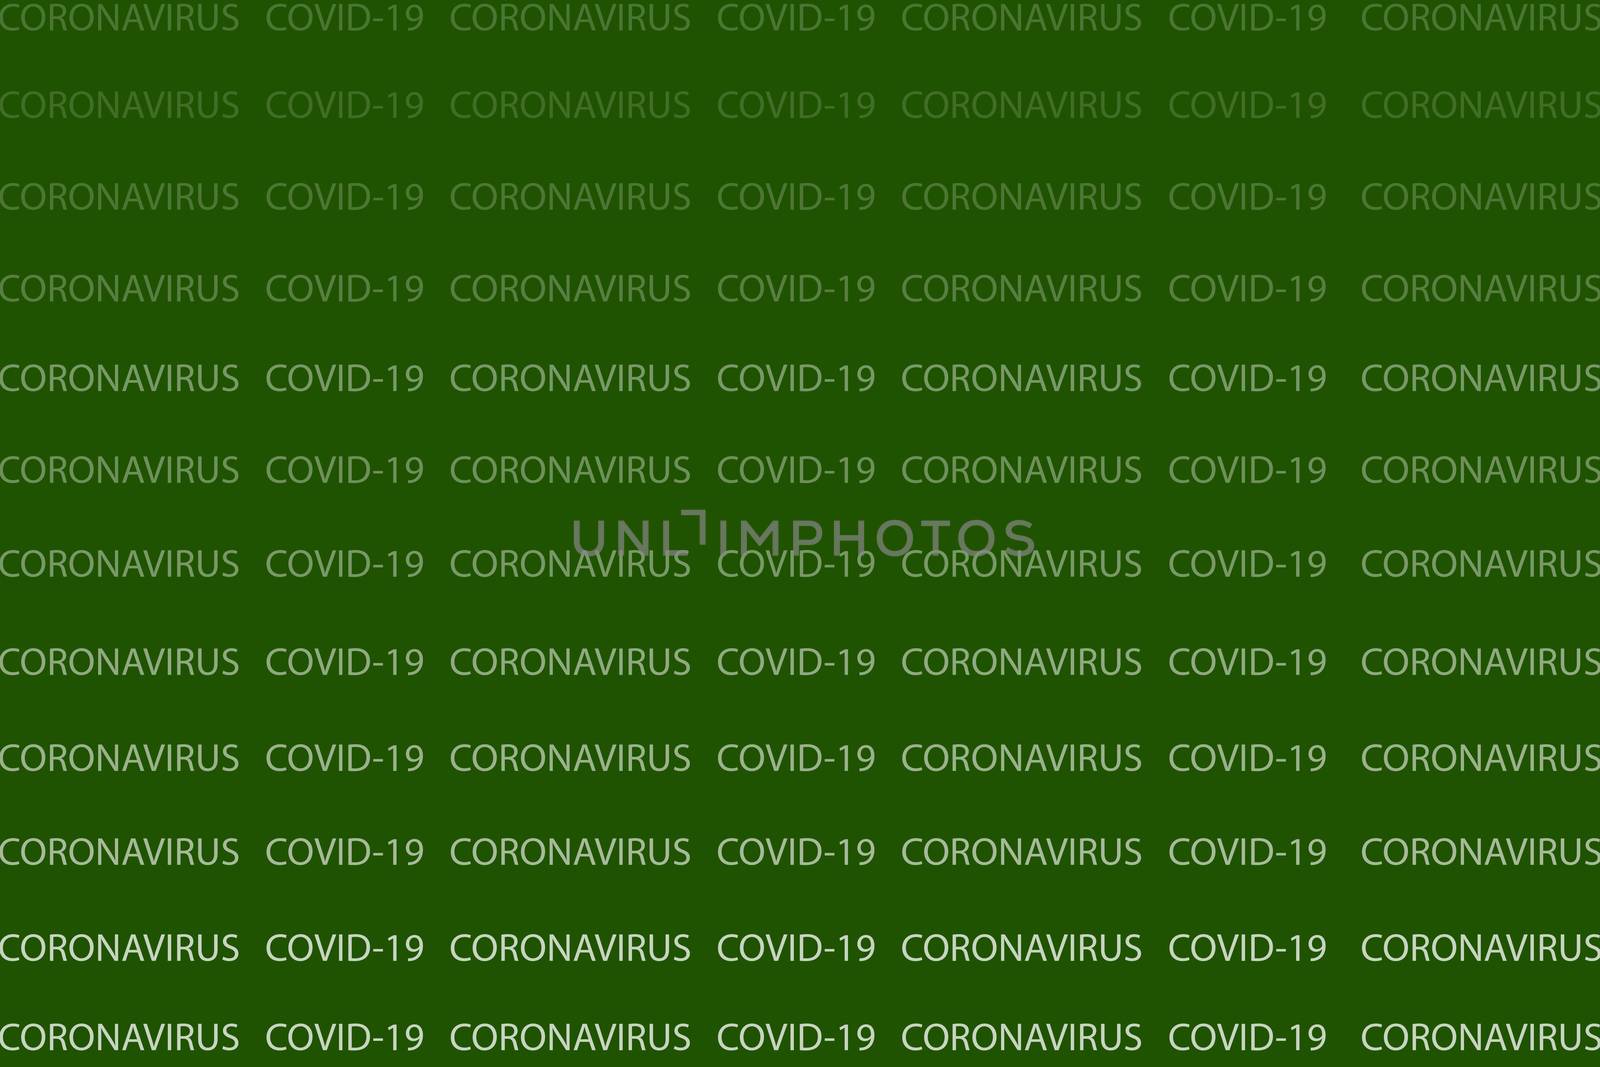 Coronavirus and COVID-19 words on green background